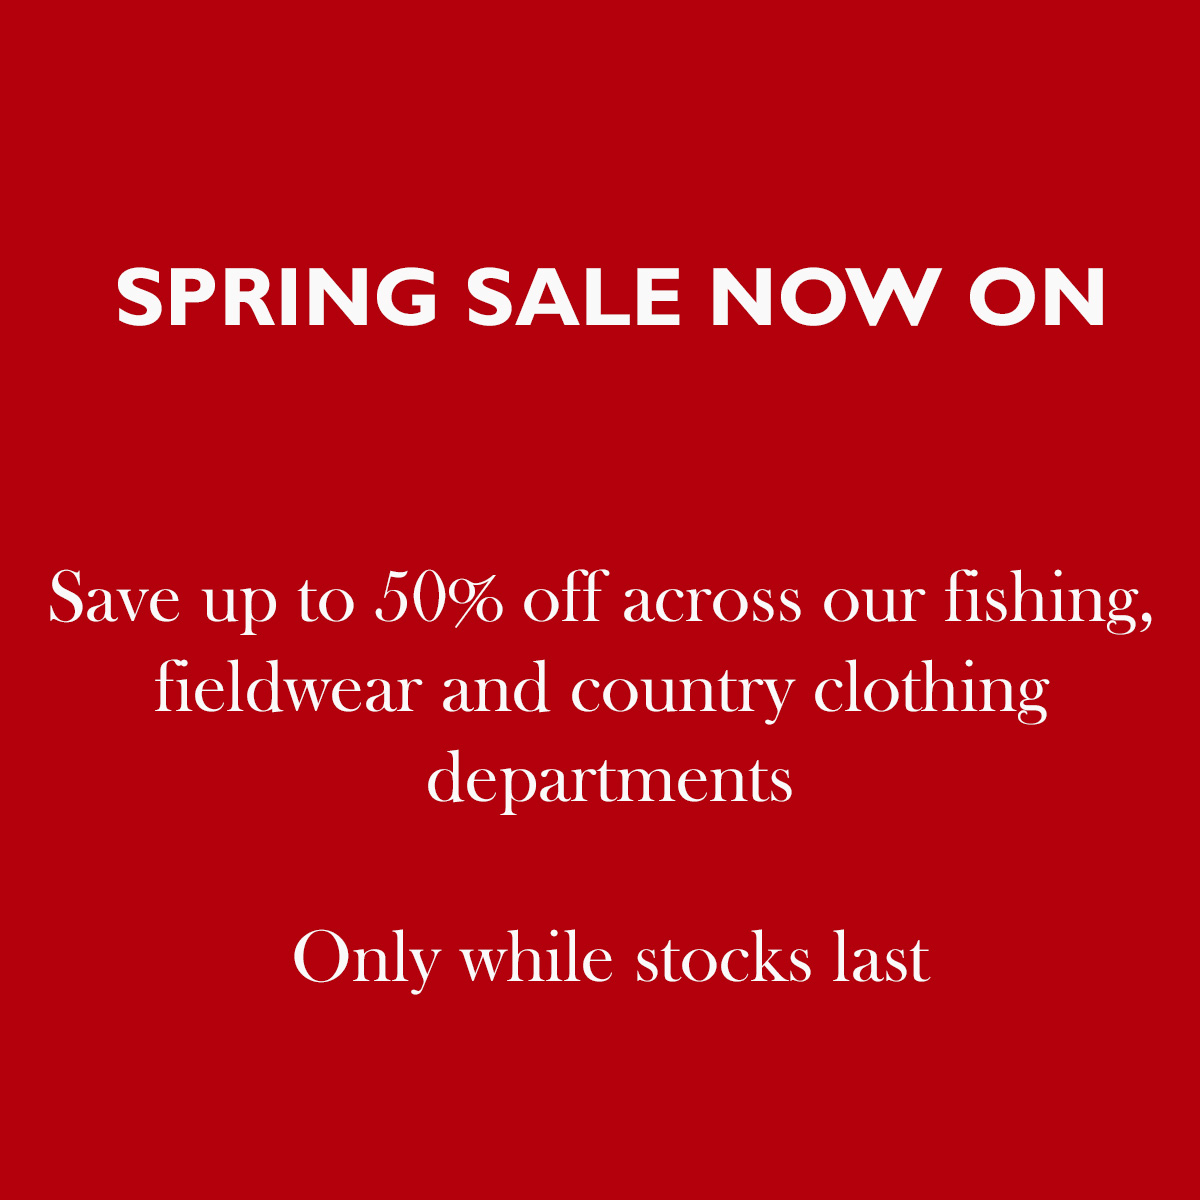 Farlows spring sale now on 👉 farlows.co.uk/sale.html #Farlows #Sale